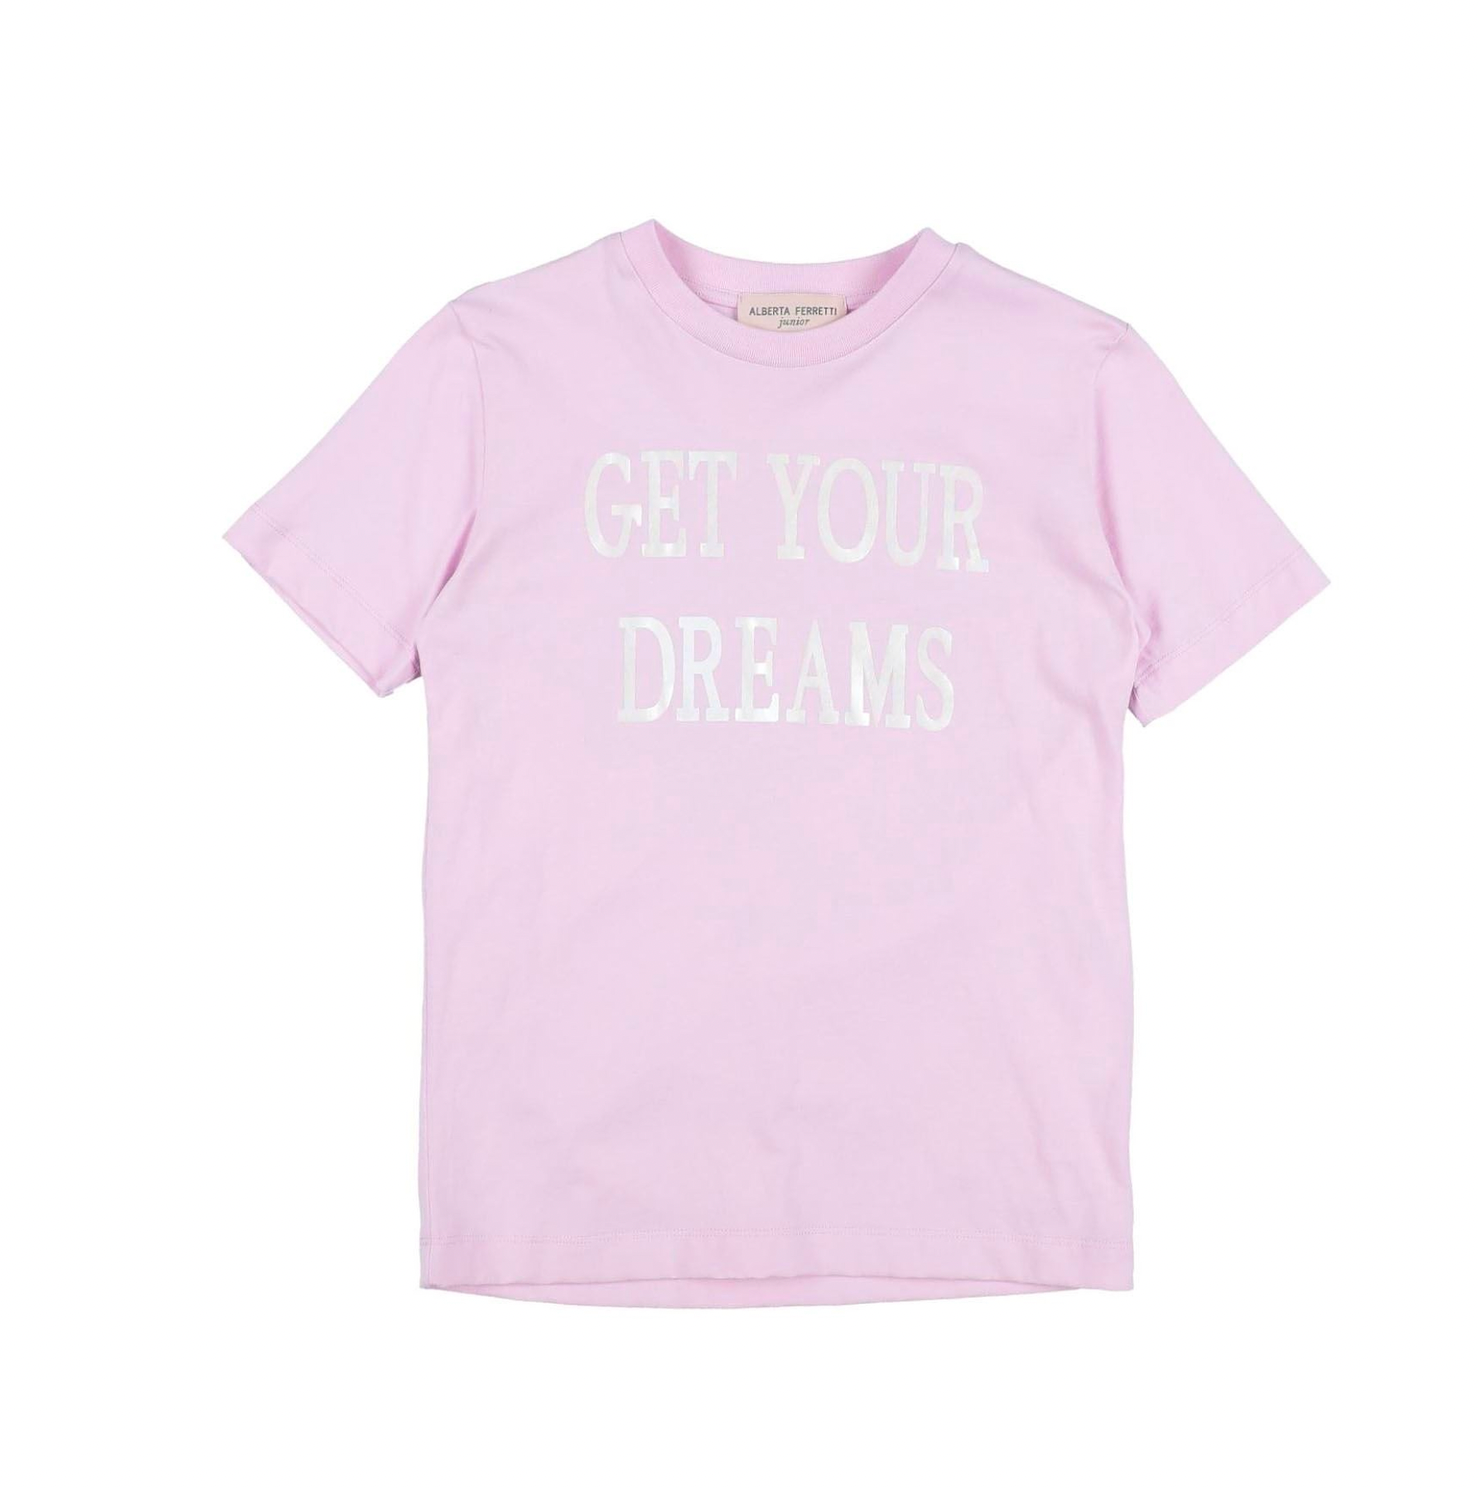 ALBERTA FERRETTI - "get your dreams" t-shirt - 4 years old